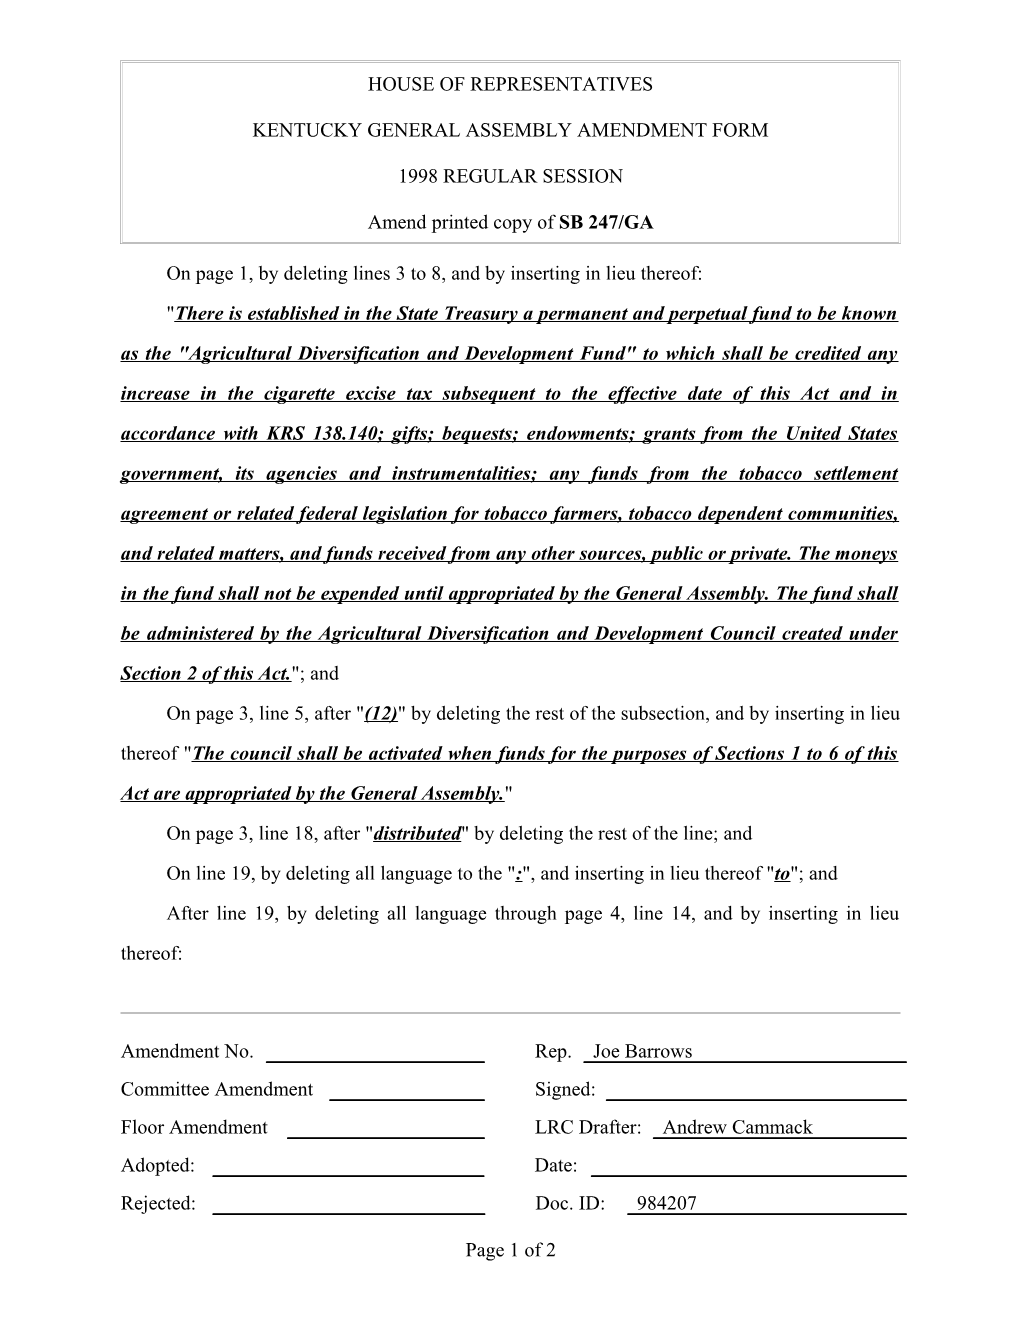 Kentucky General Assembly Amendment Form s4